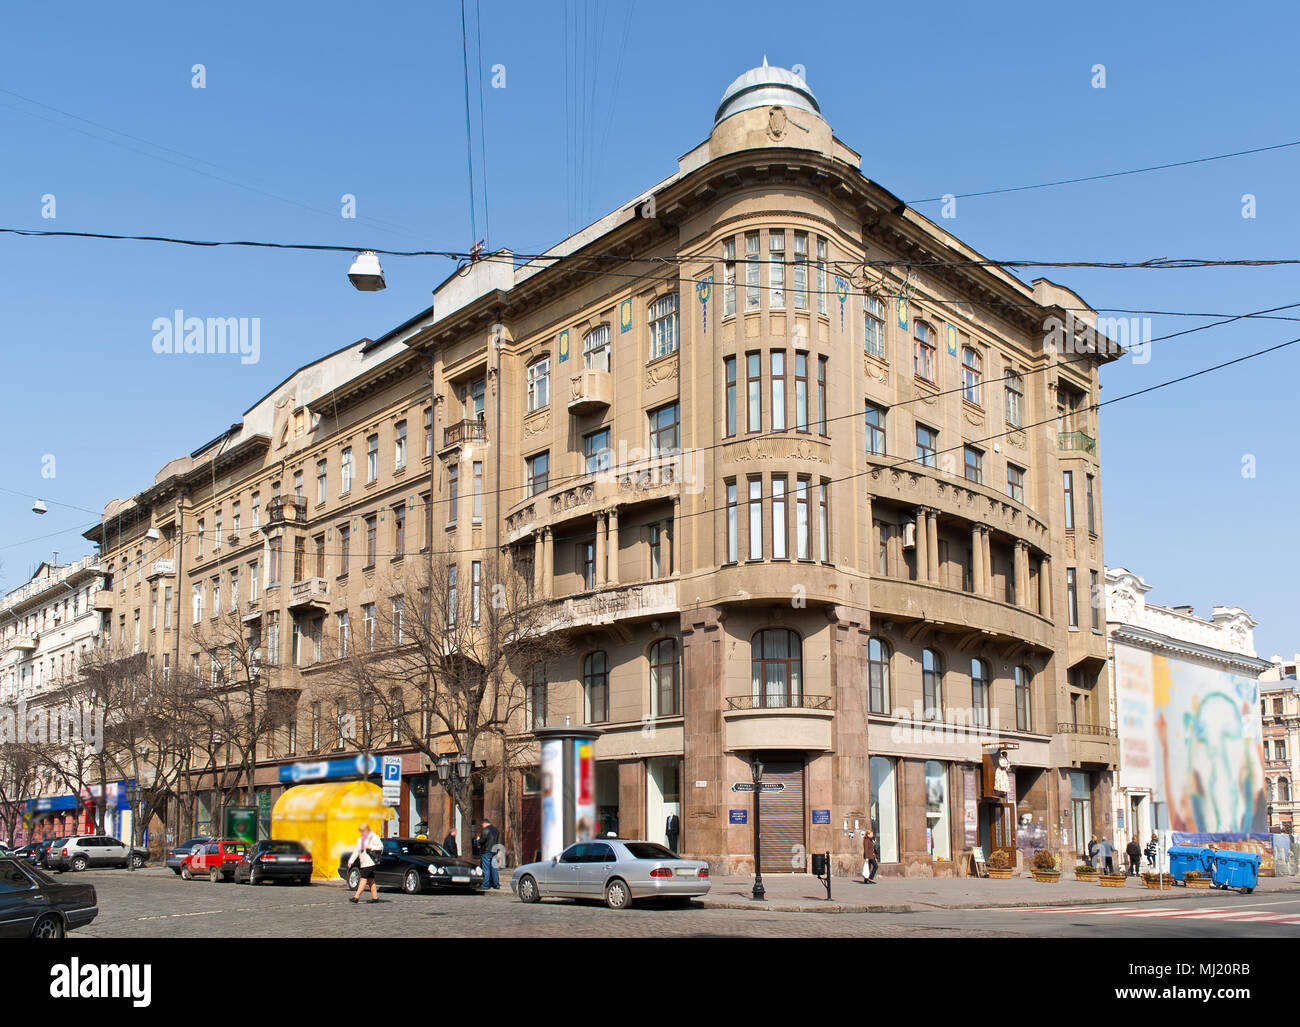 The old town of Odessa, Ukraine Stock Photo